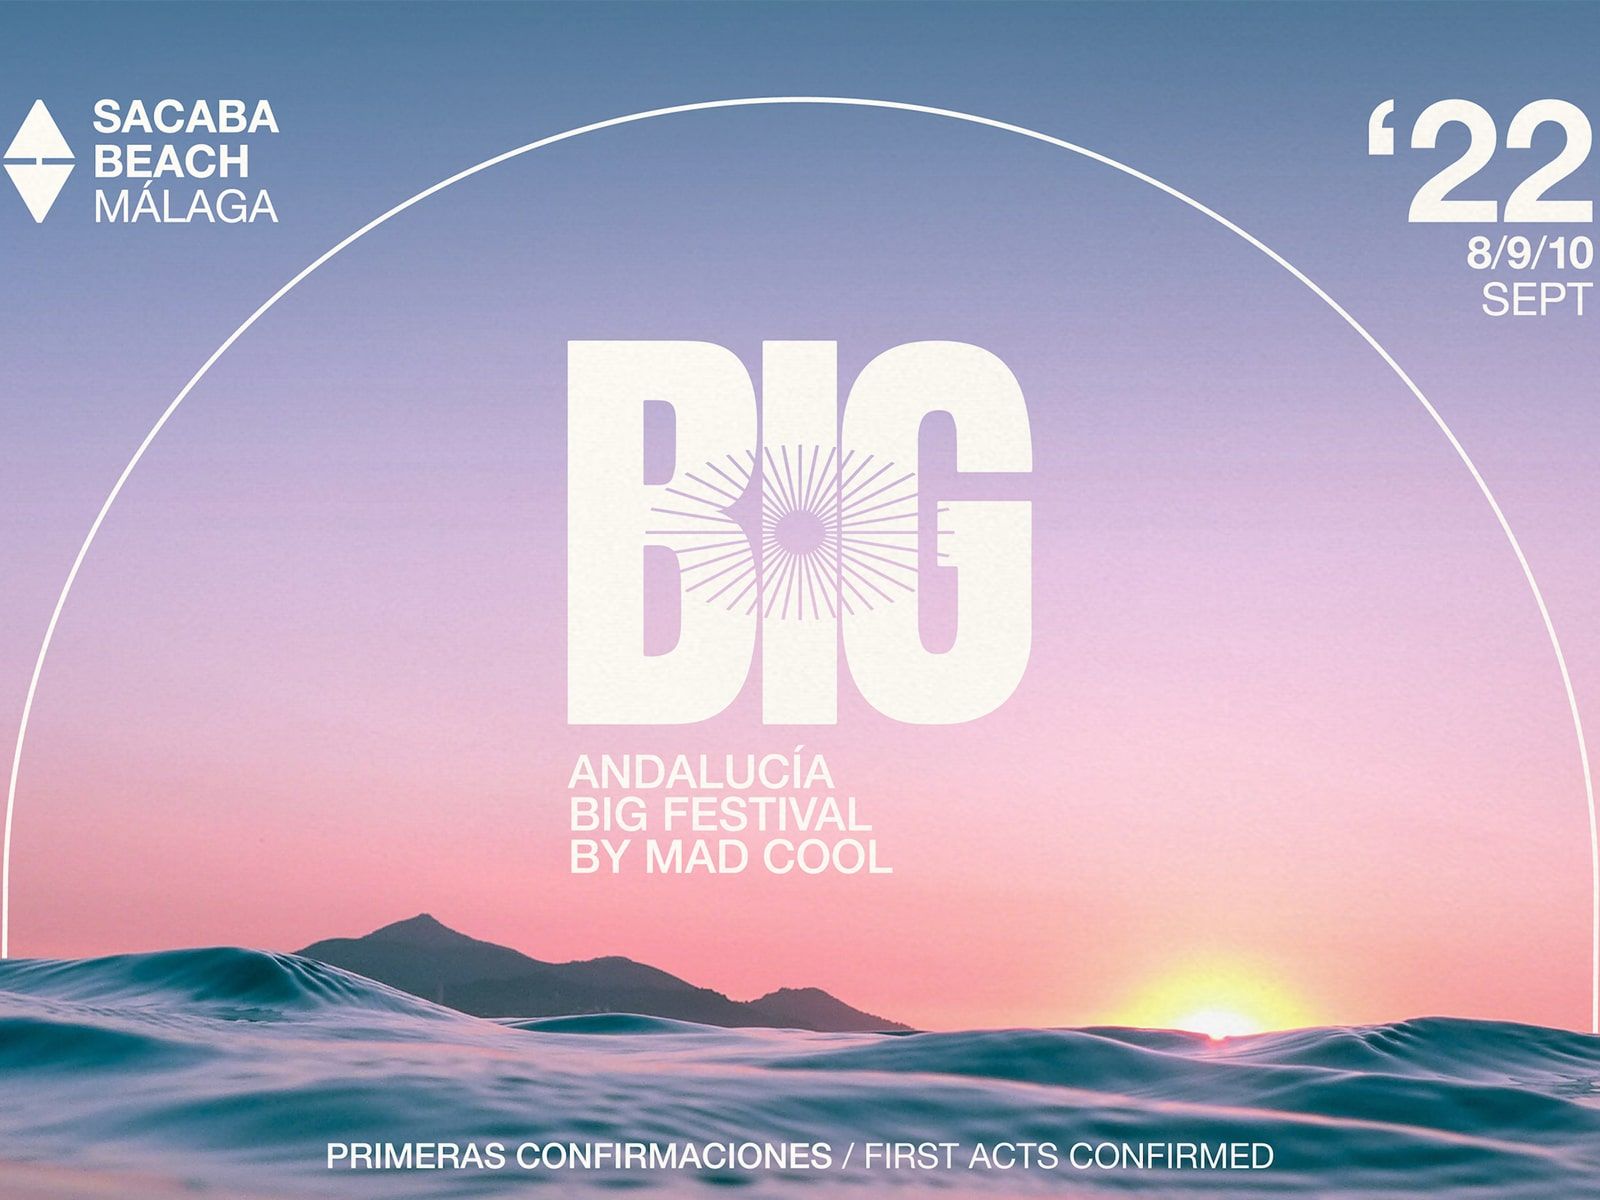 La Junta de Andalucía y Mad Cool Festival presentan el proyecto cultural Andalucia Big